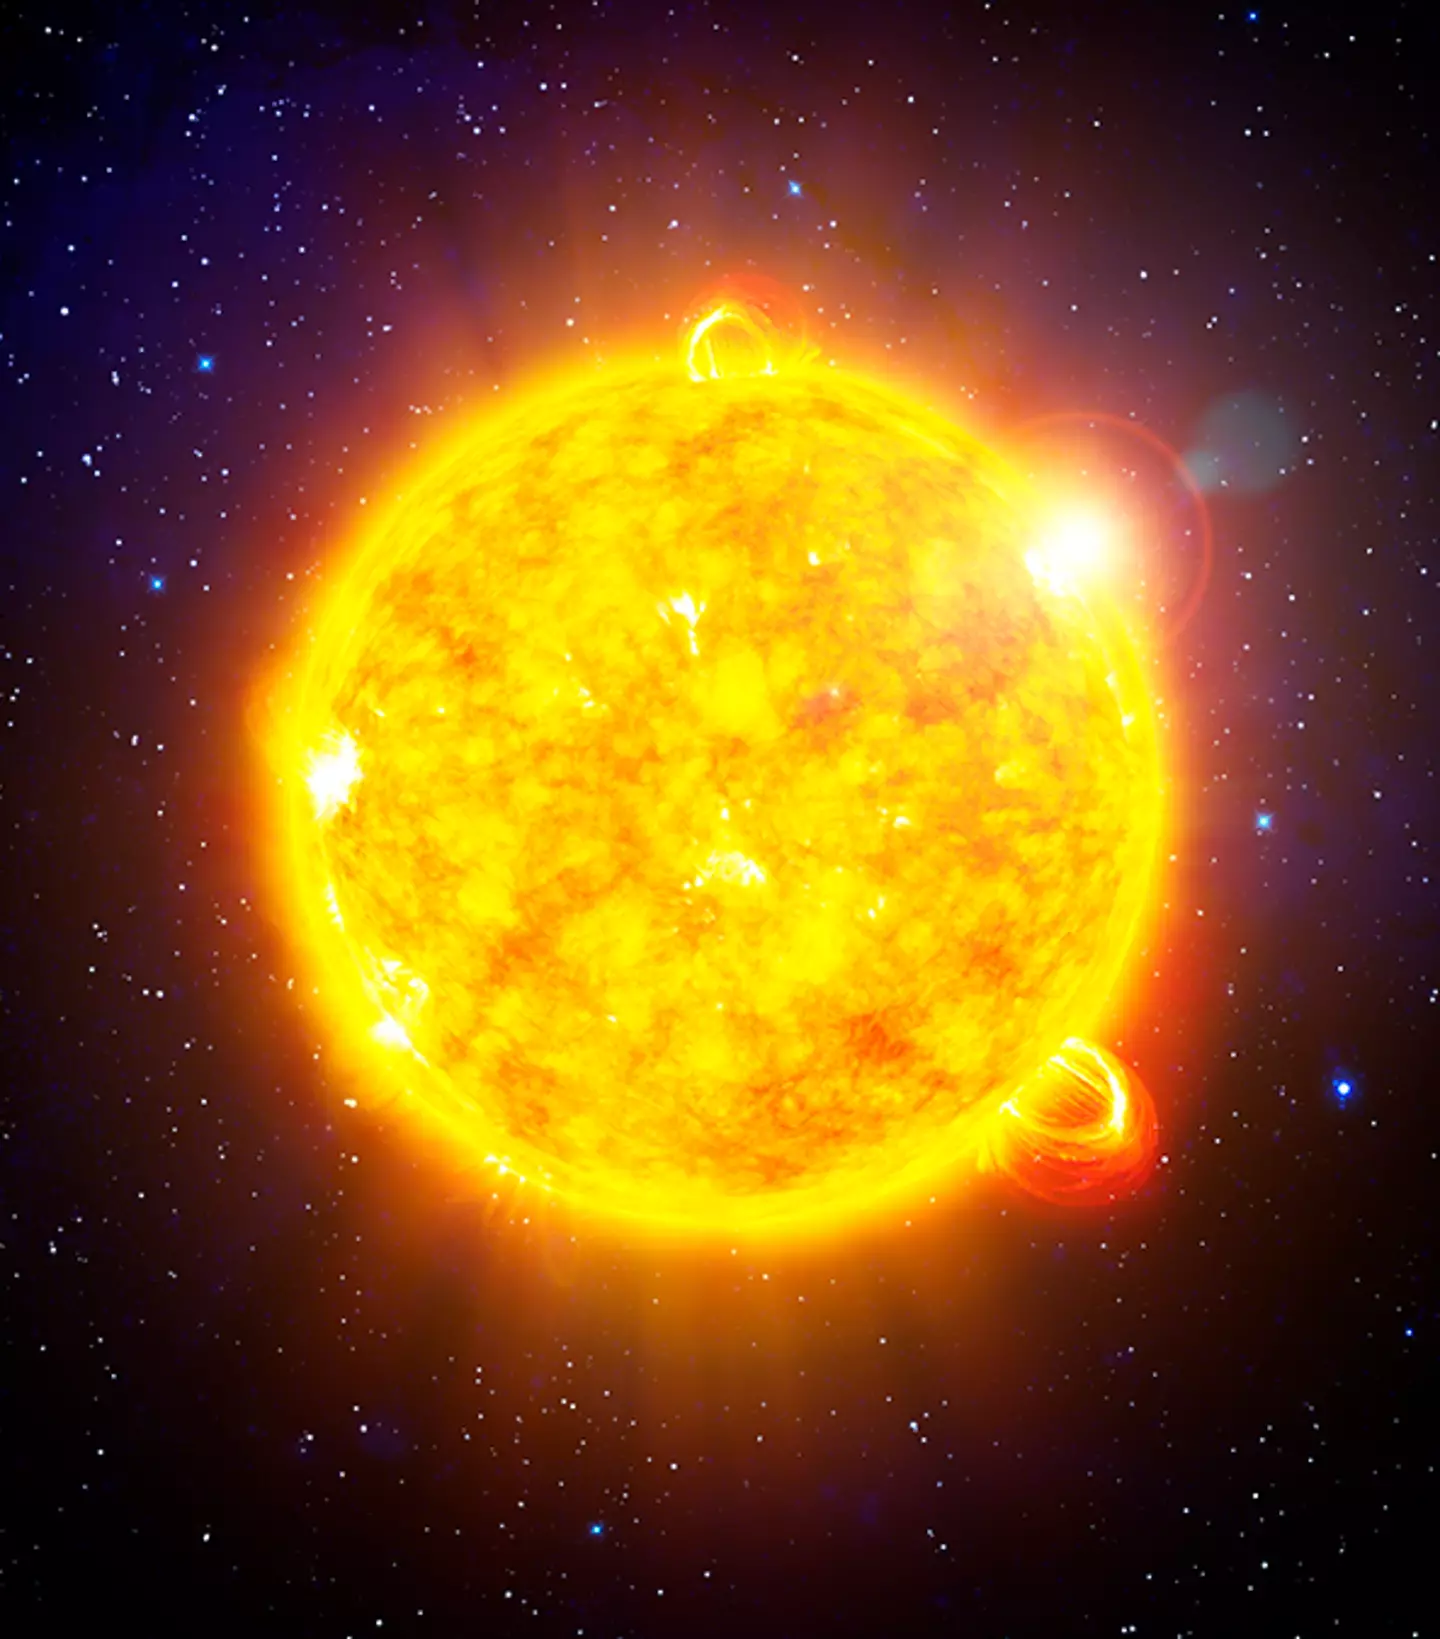 Radiant Fury: Sun Unleashes Powerful X1.0 Class Solar Flare